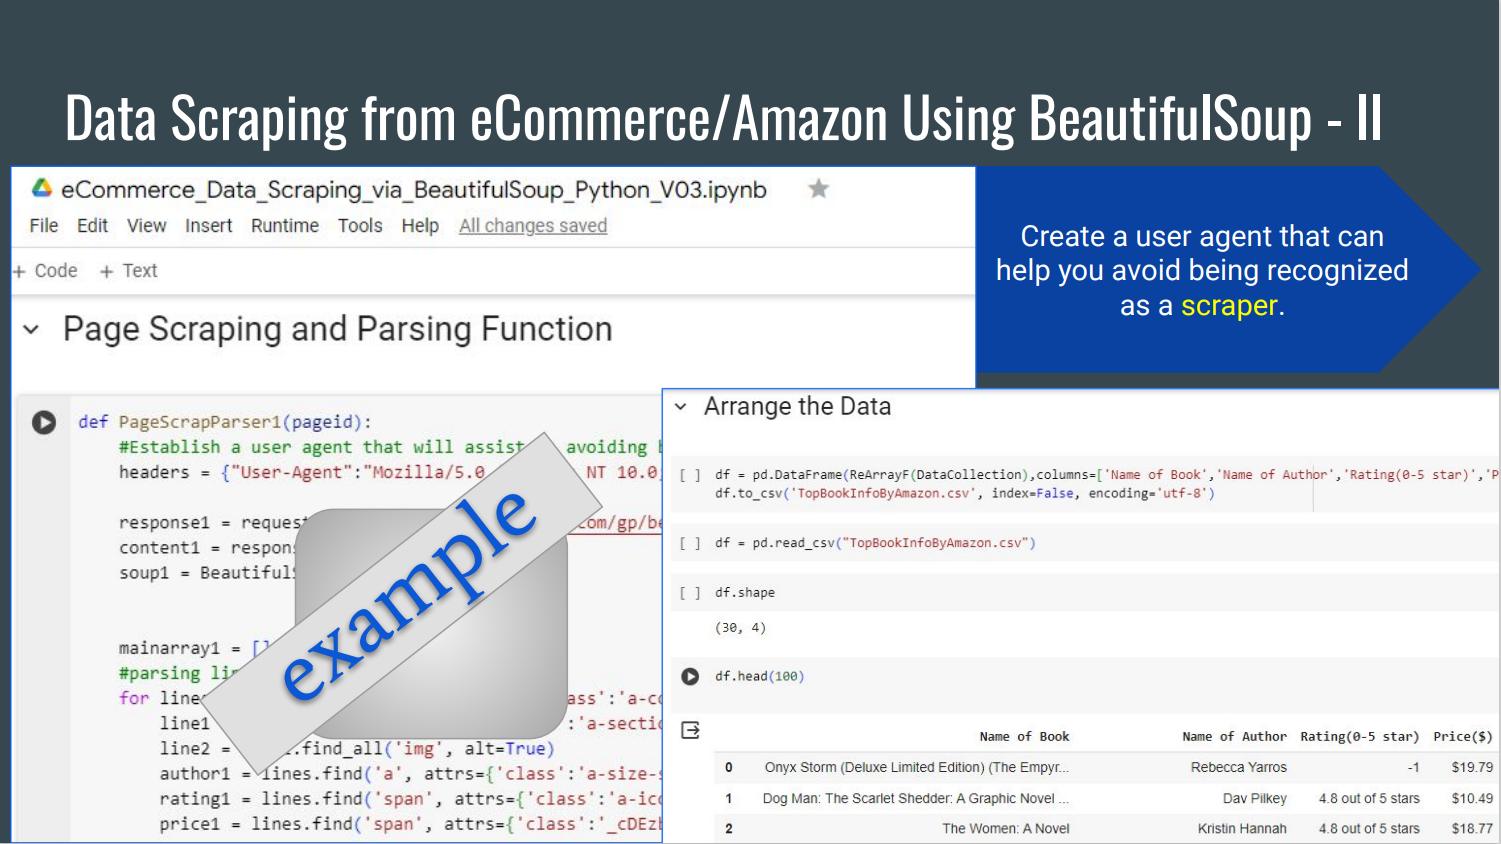 Data Scraping from eCommerce/Amazon Using BeautifulSoup - II